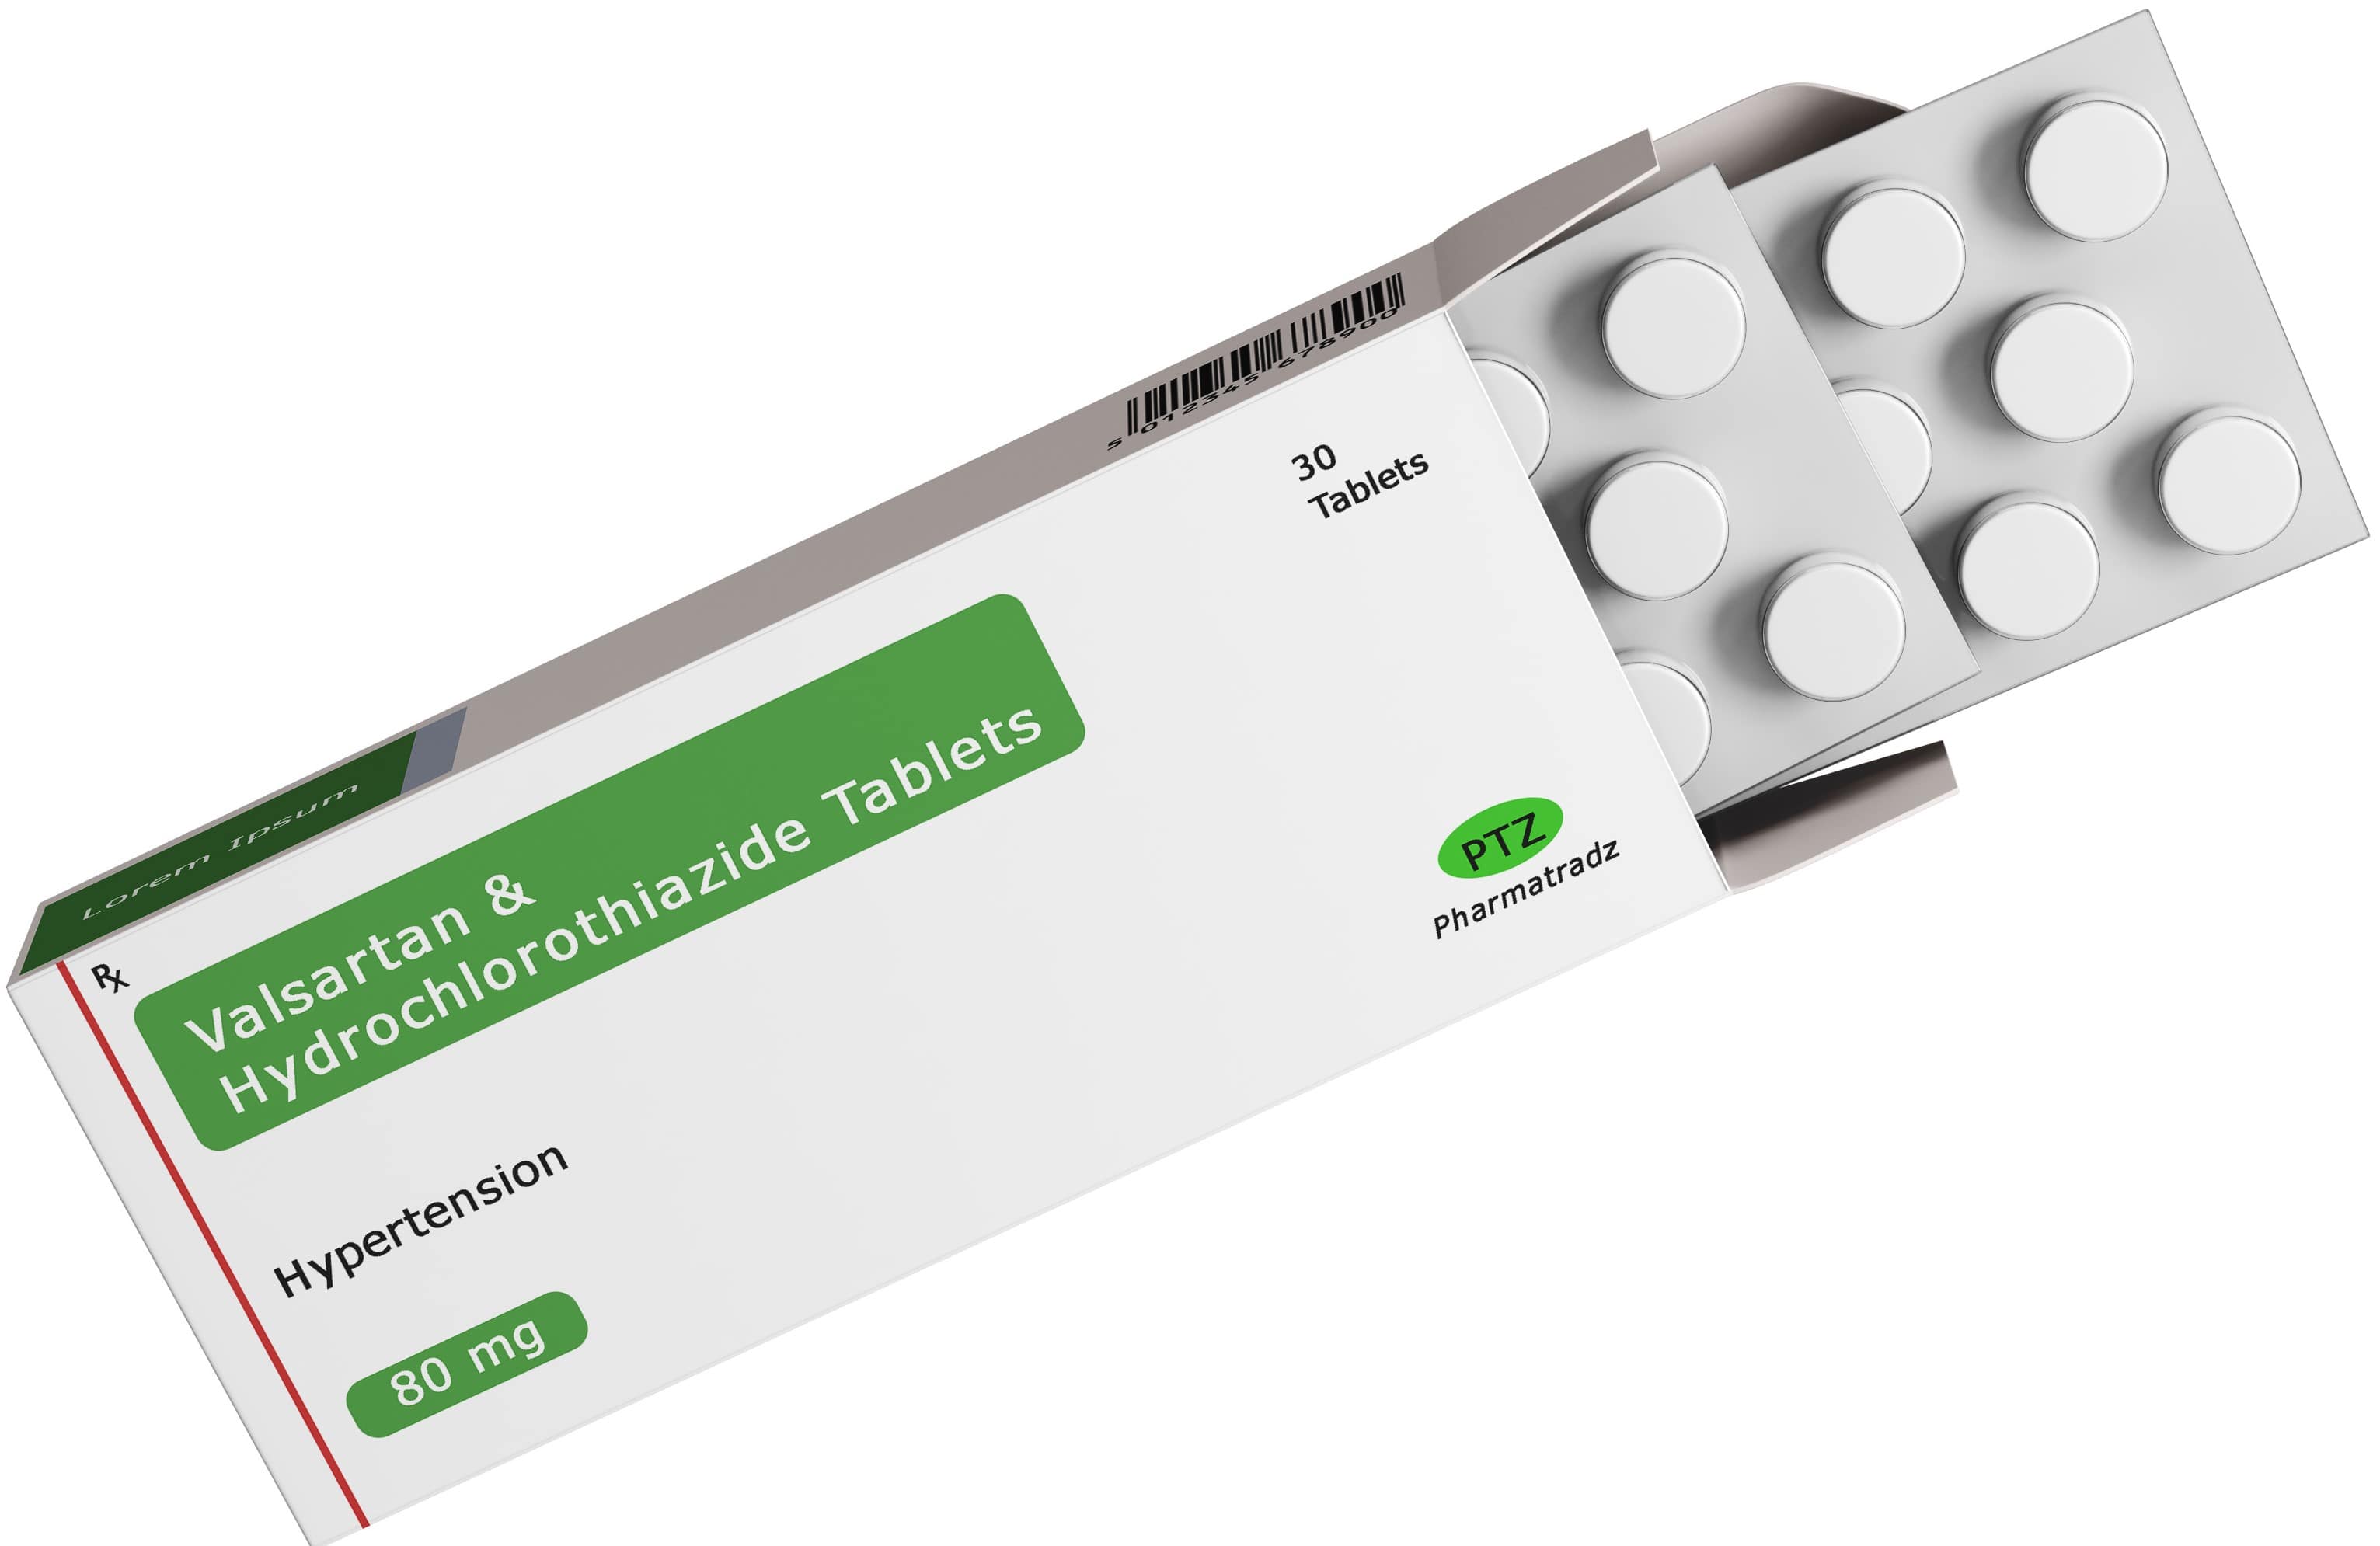 Valsartan & Hydrochlorothiazide Tablets